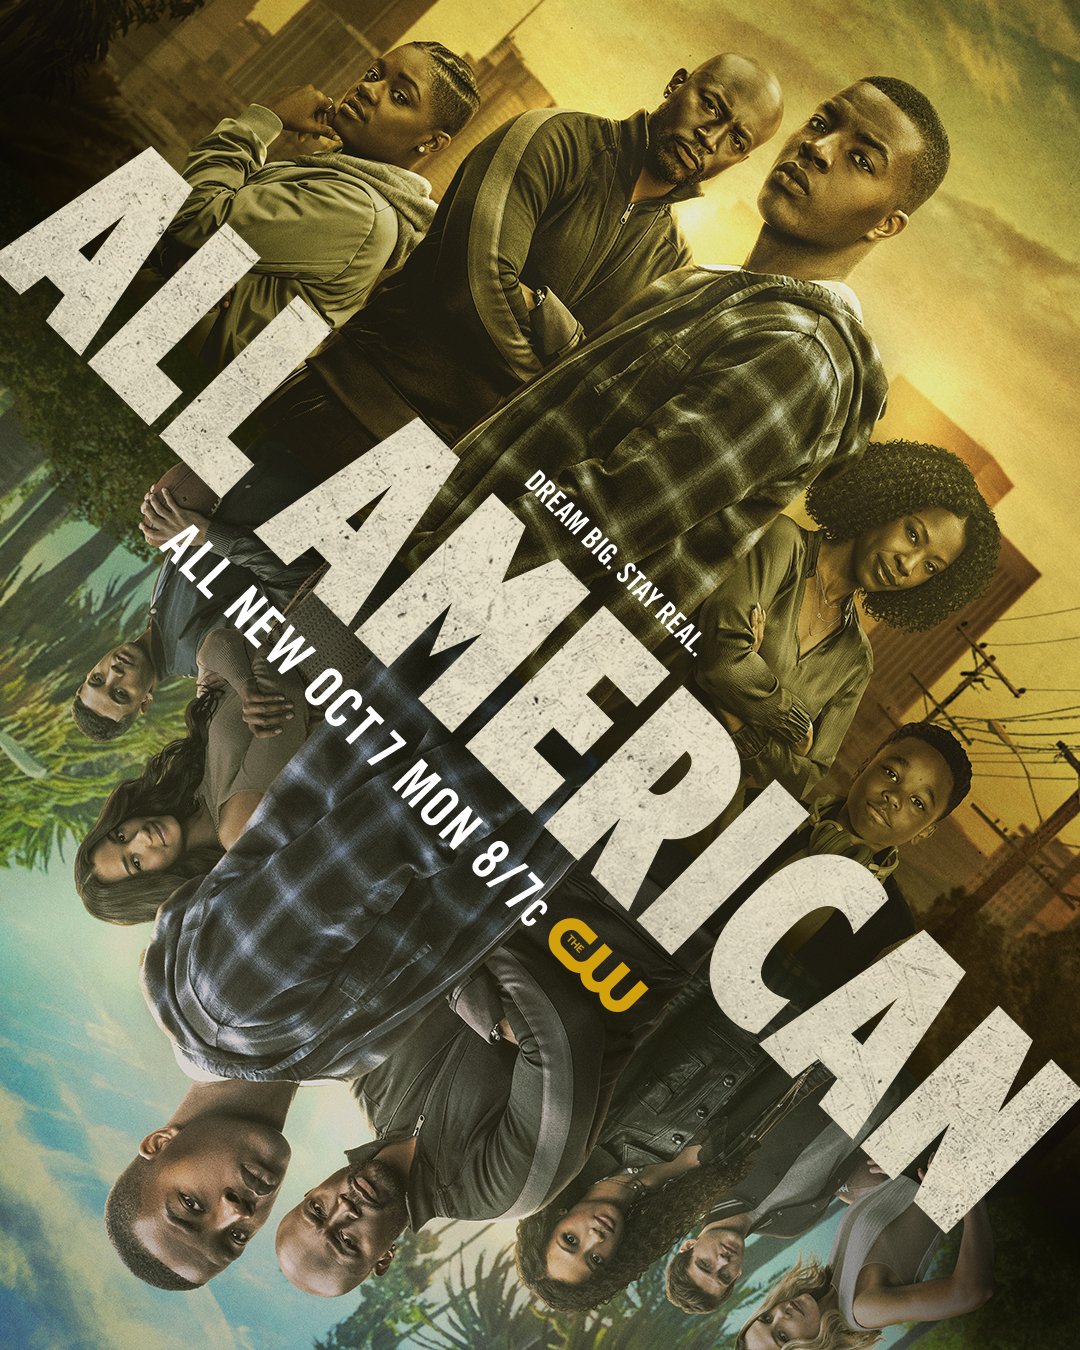 All American' Season 3 Release Date: When Is the Next Season